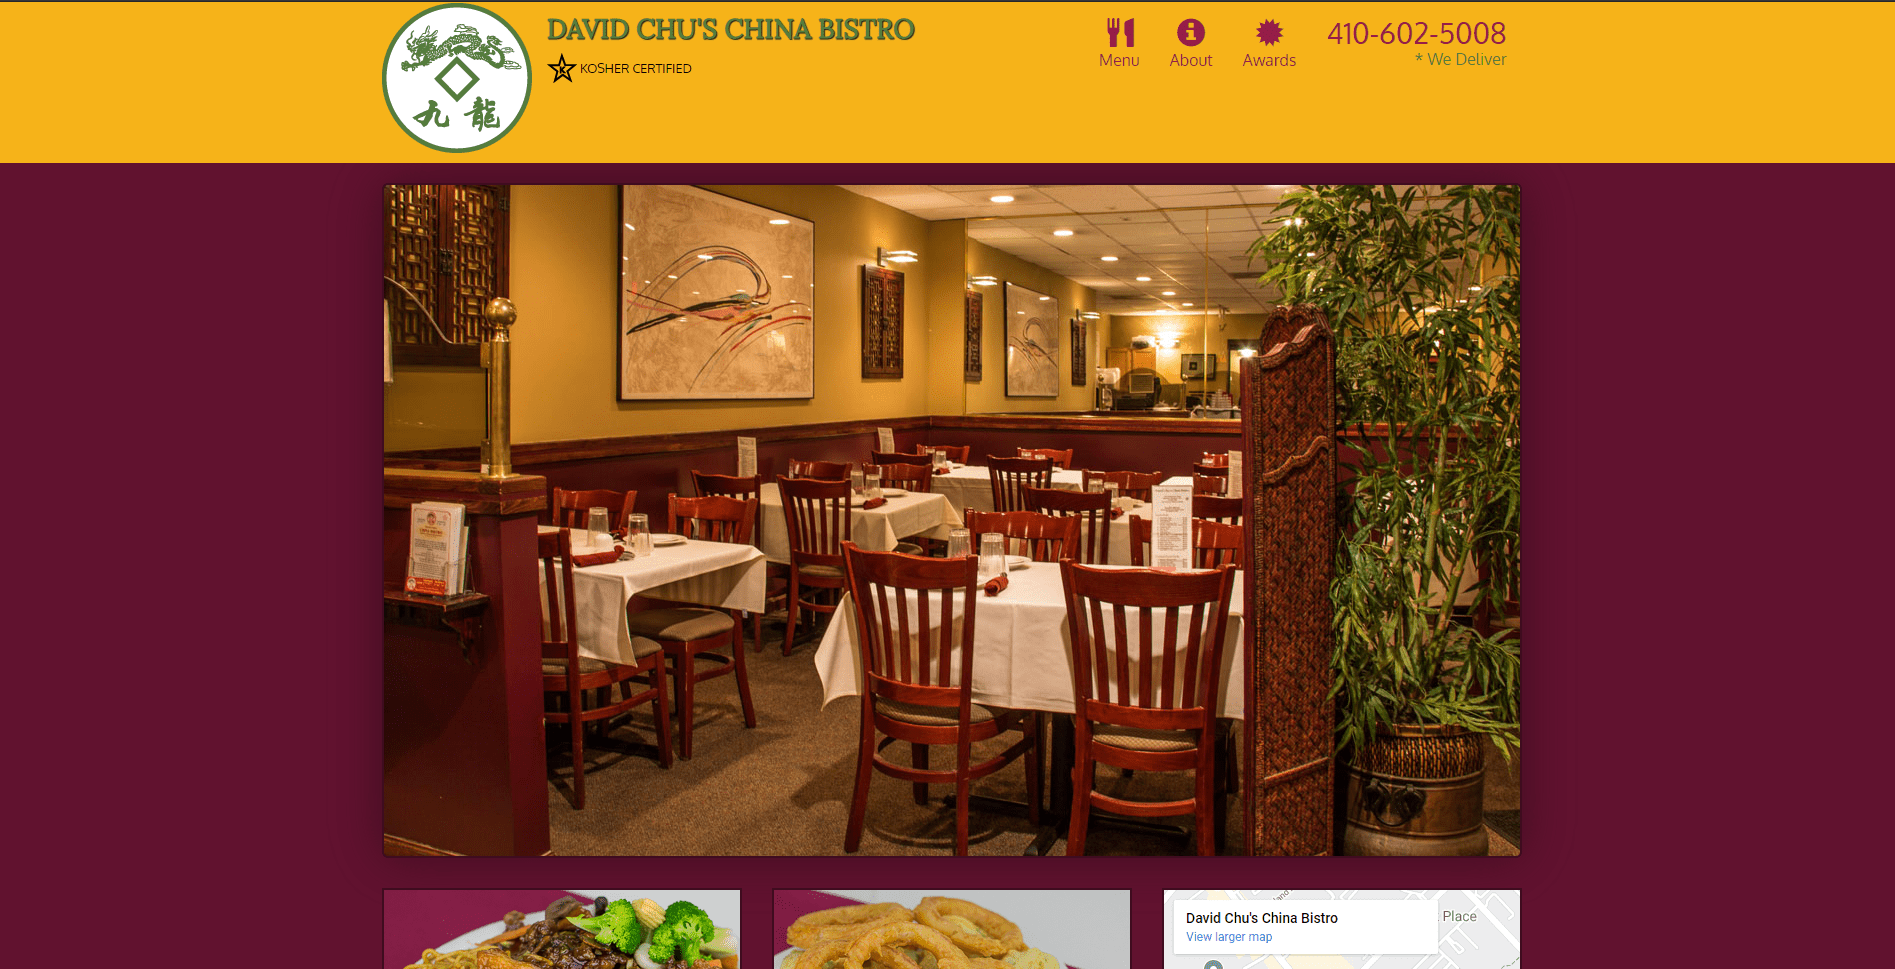 David Chu Restaurant's Website Ratnadeep Das Choudhury